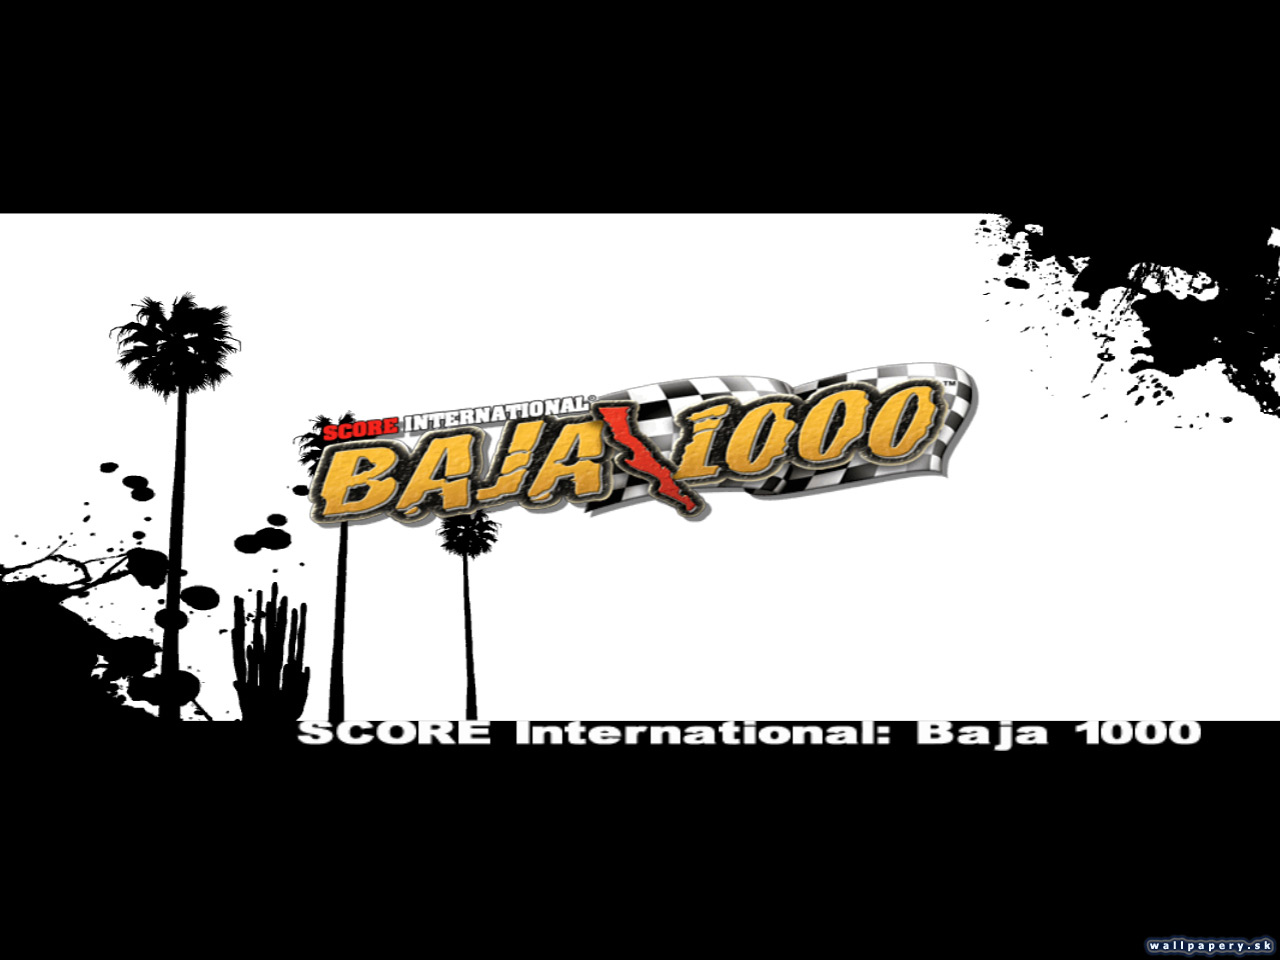 SCORE International: Baja 1000 - wallpaper 5